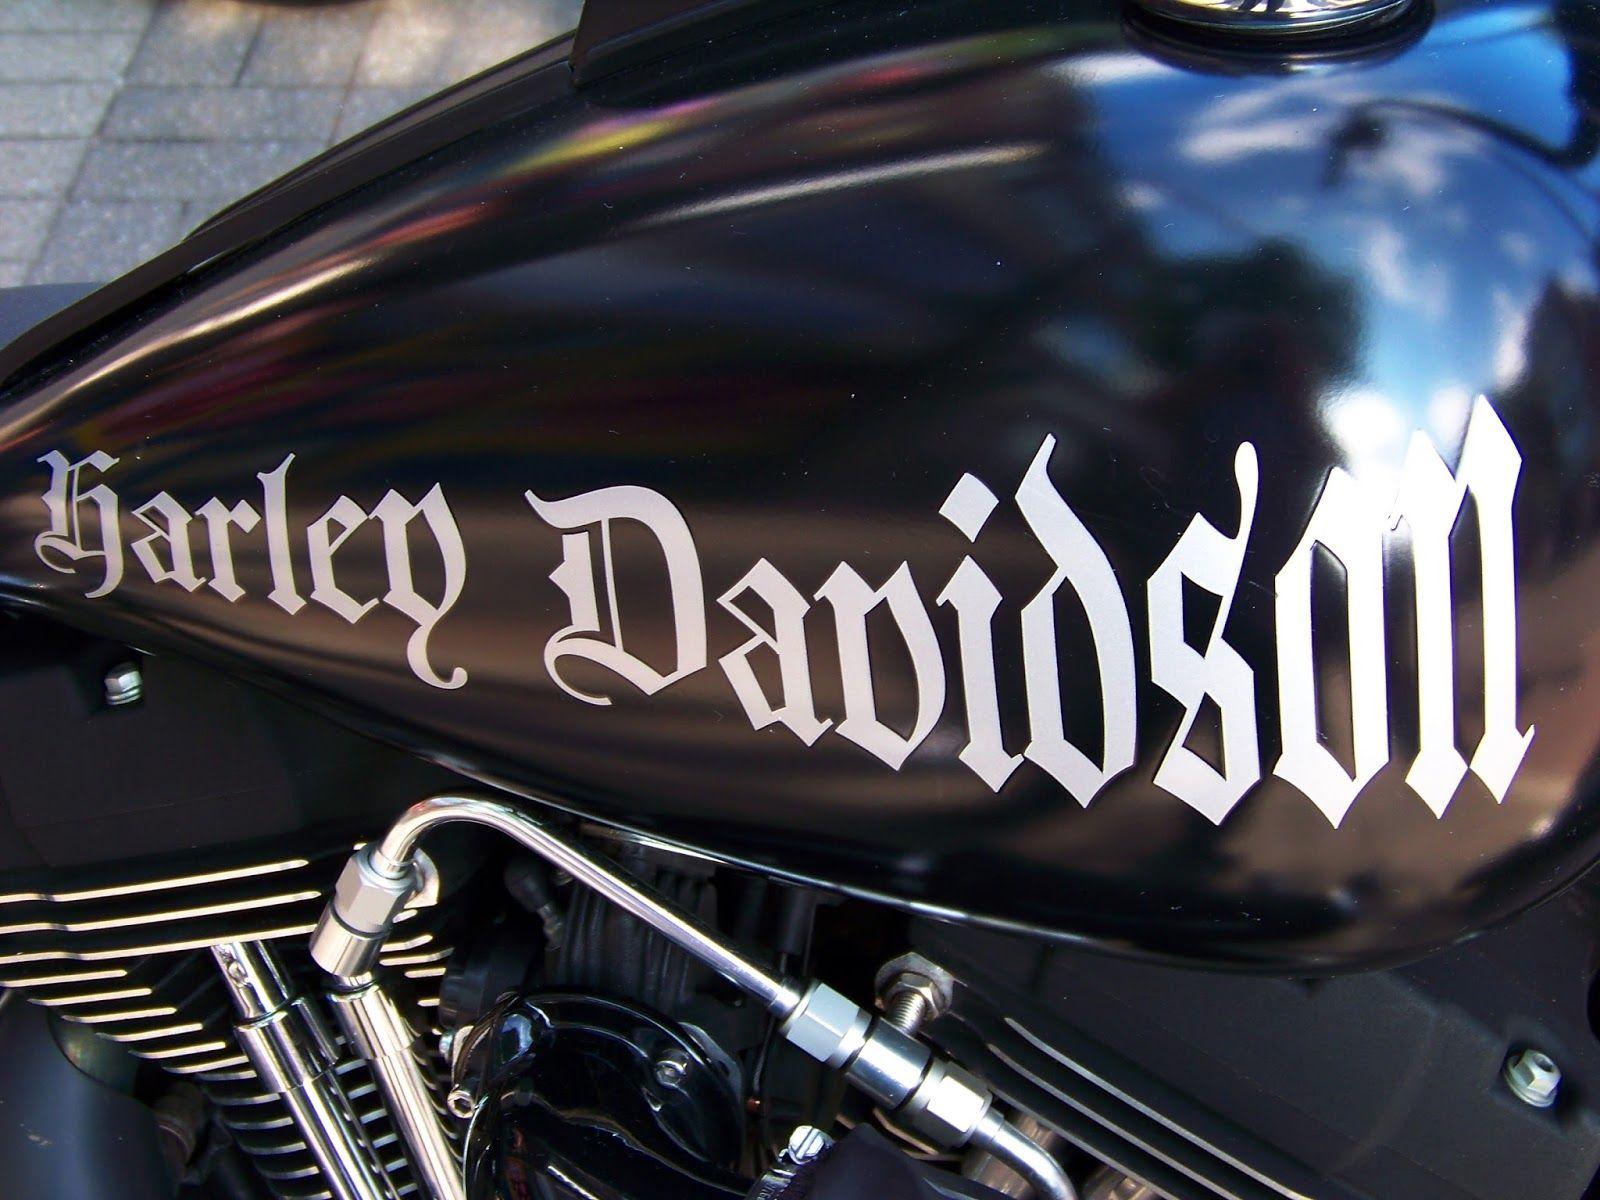 Motorcycle Tank Logo - Harley Davidson tank logo's | New Design Motorcycle Modification